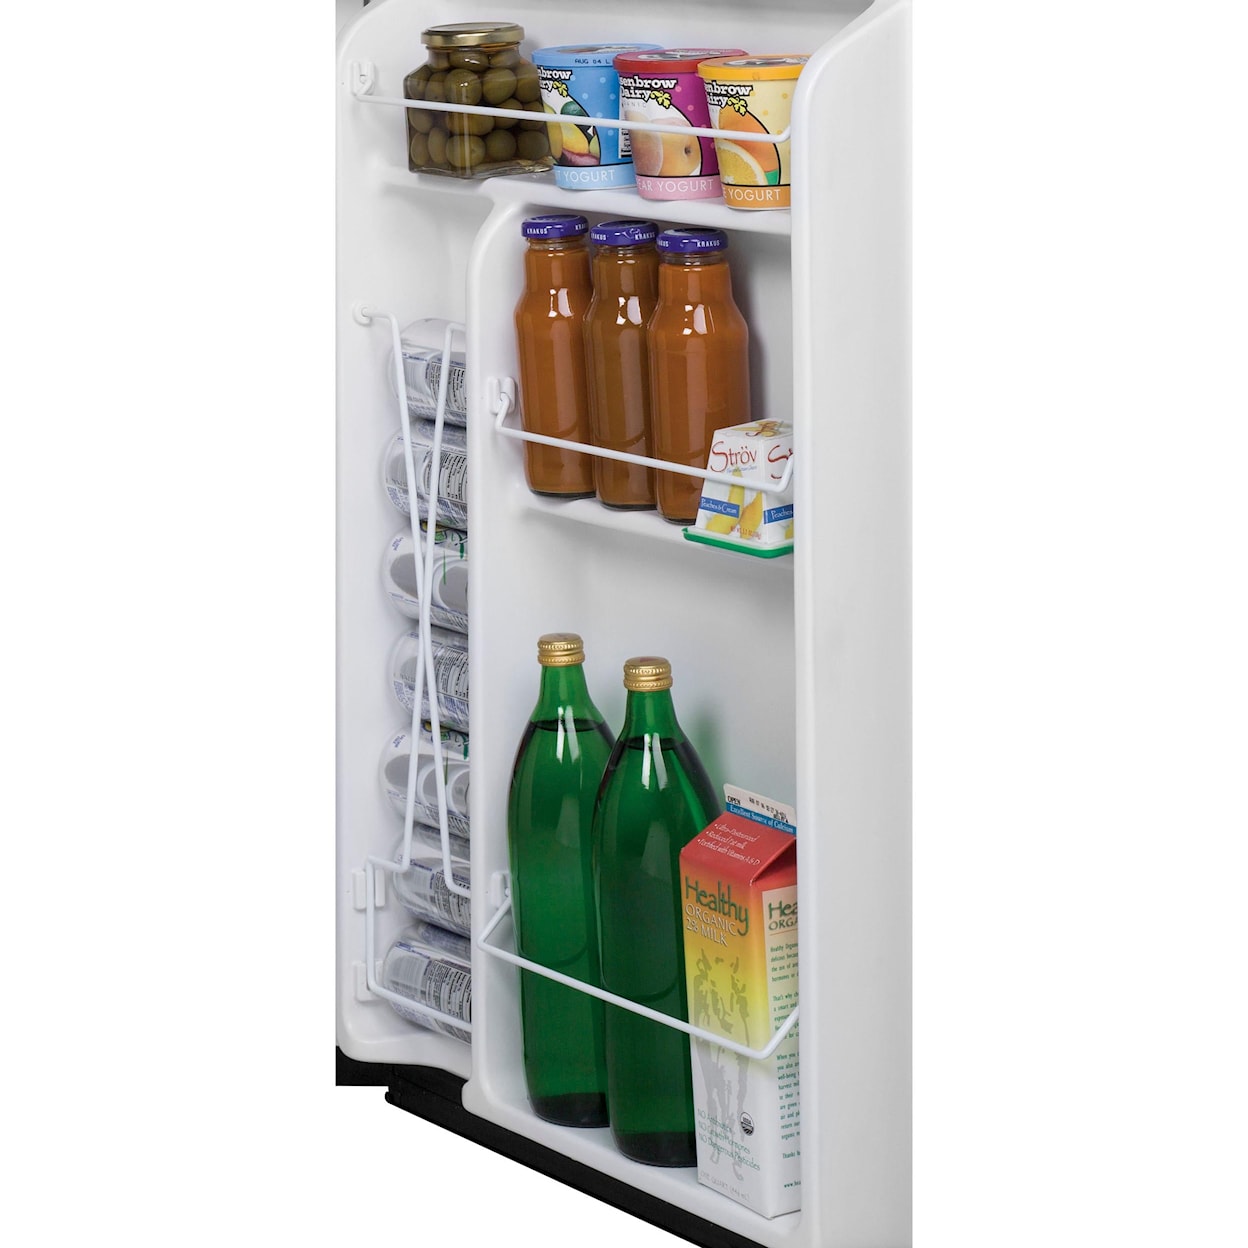 GE Appliances Refrigerators Compact Refrigerator